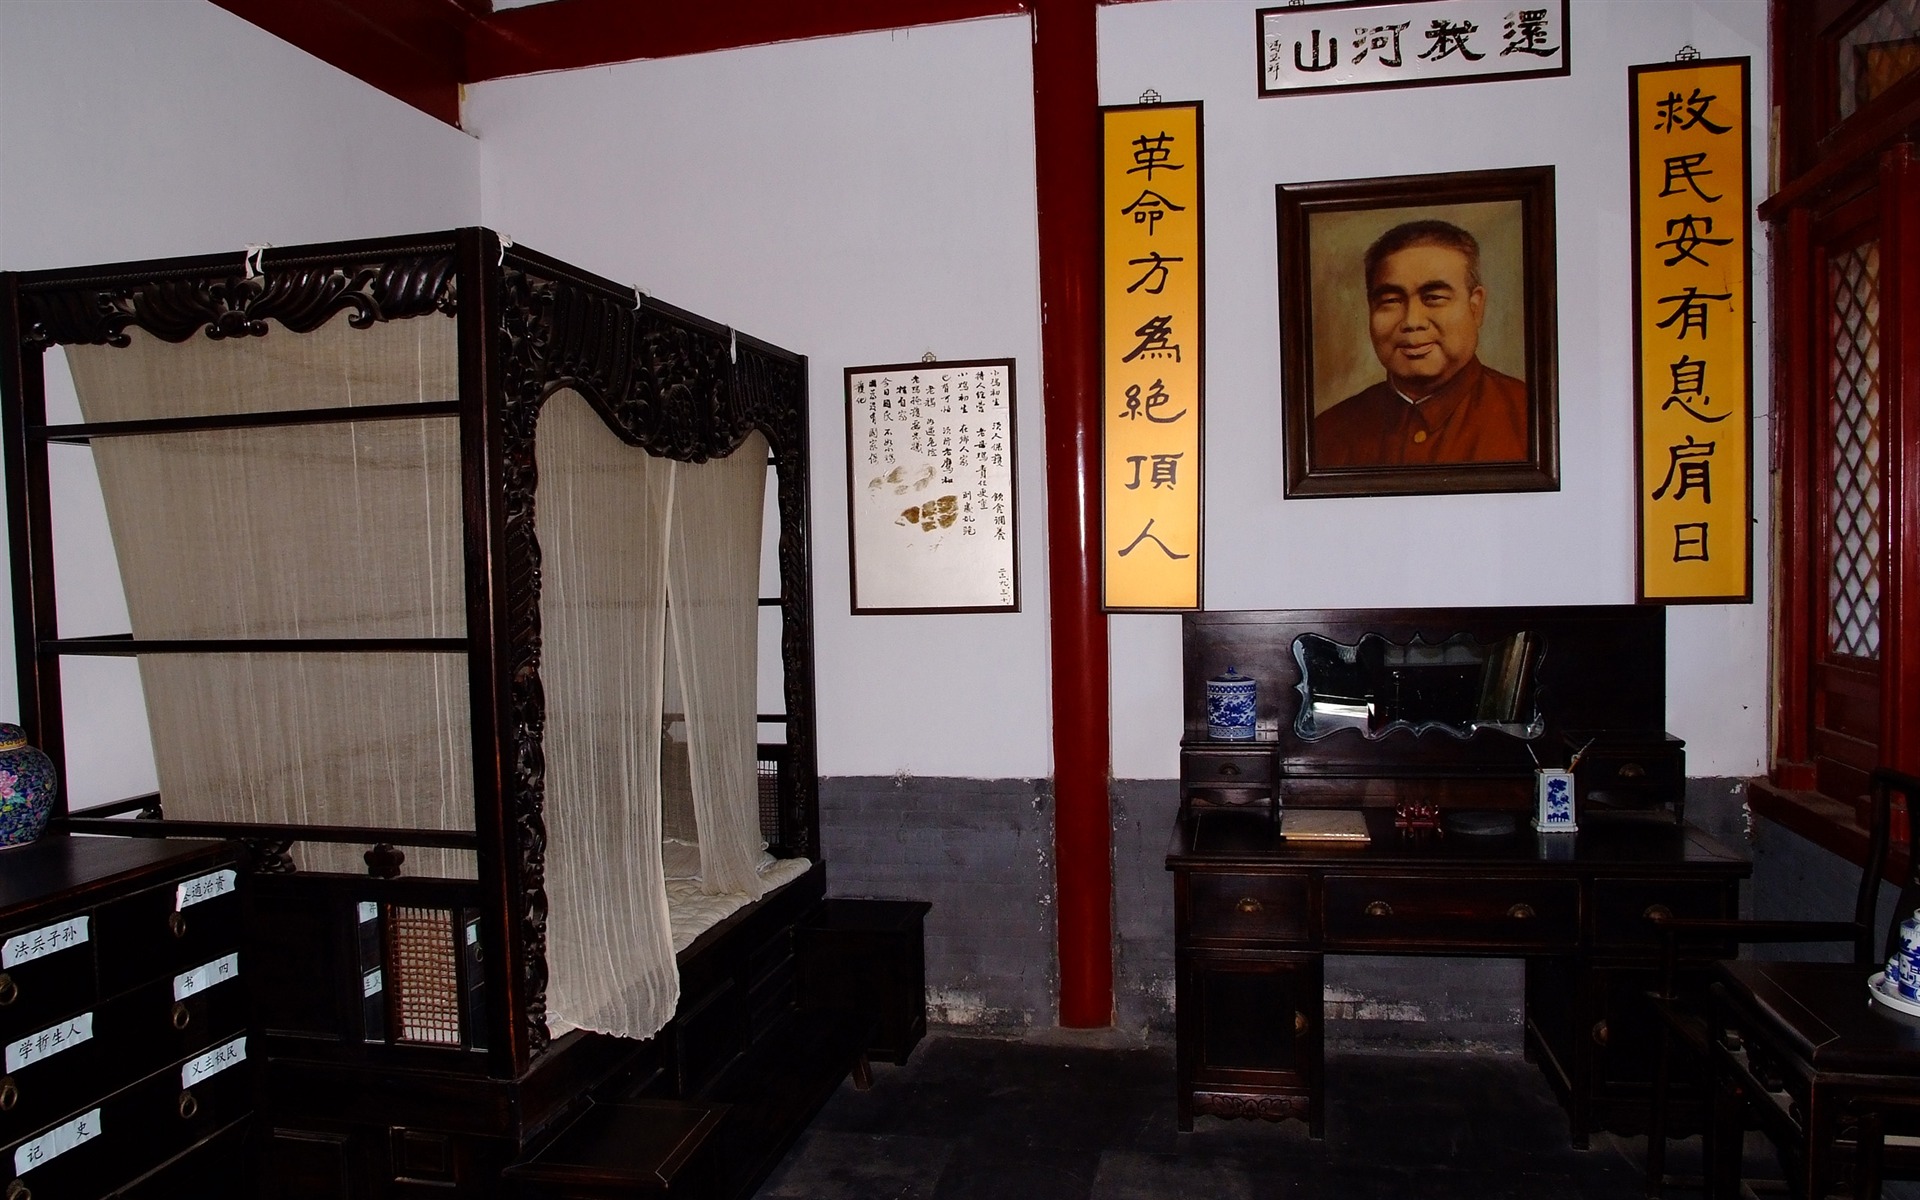 Caridad Templo Jingxi monumentos (obras barras de refuerzo) #13 - 1920x1200